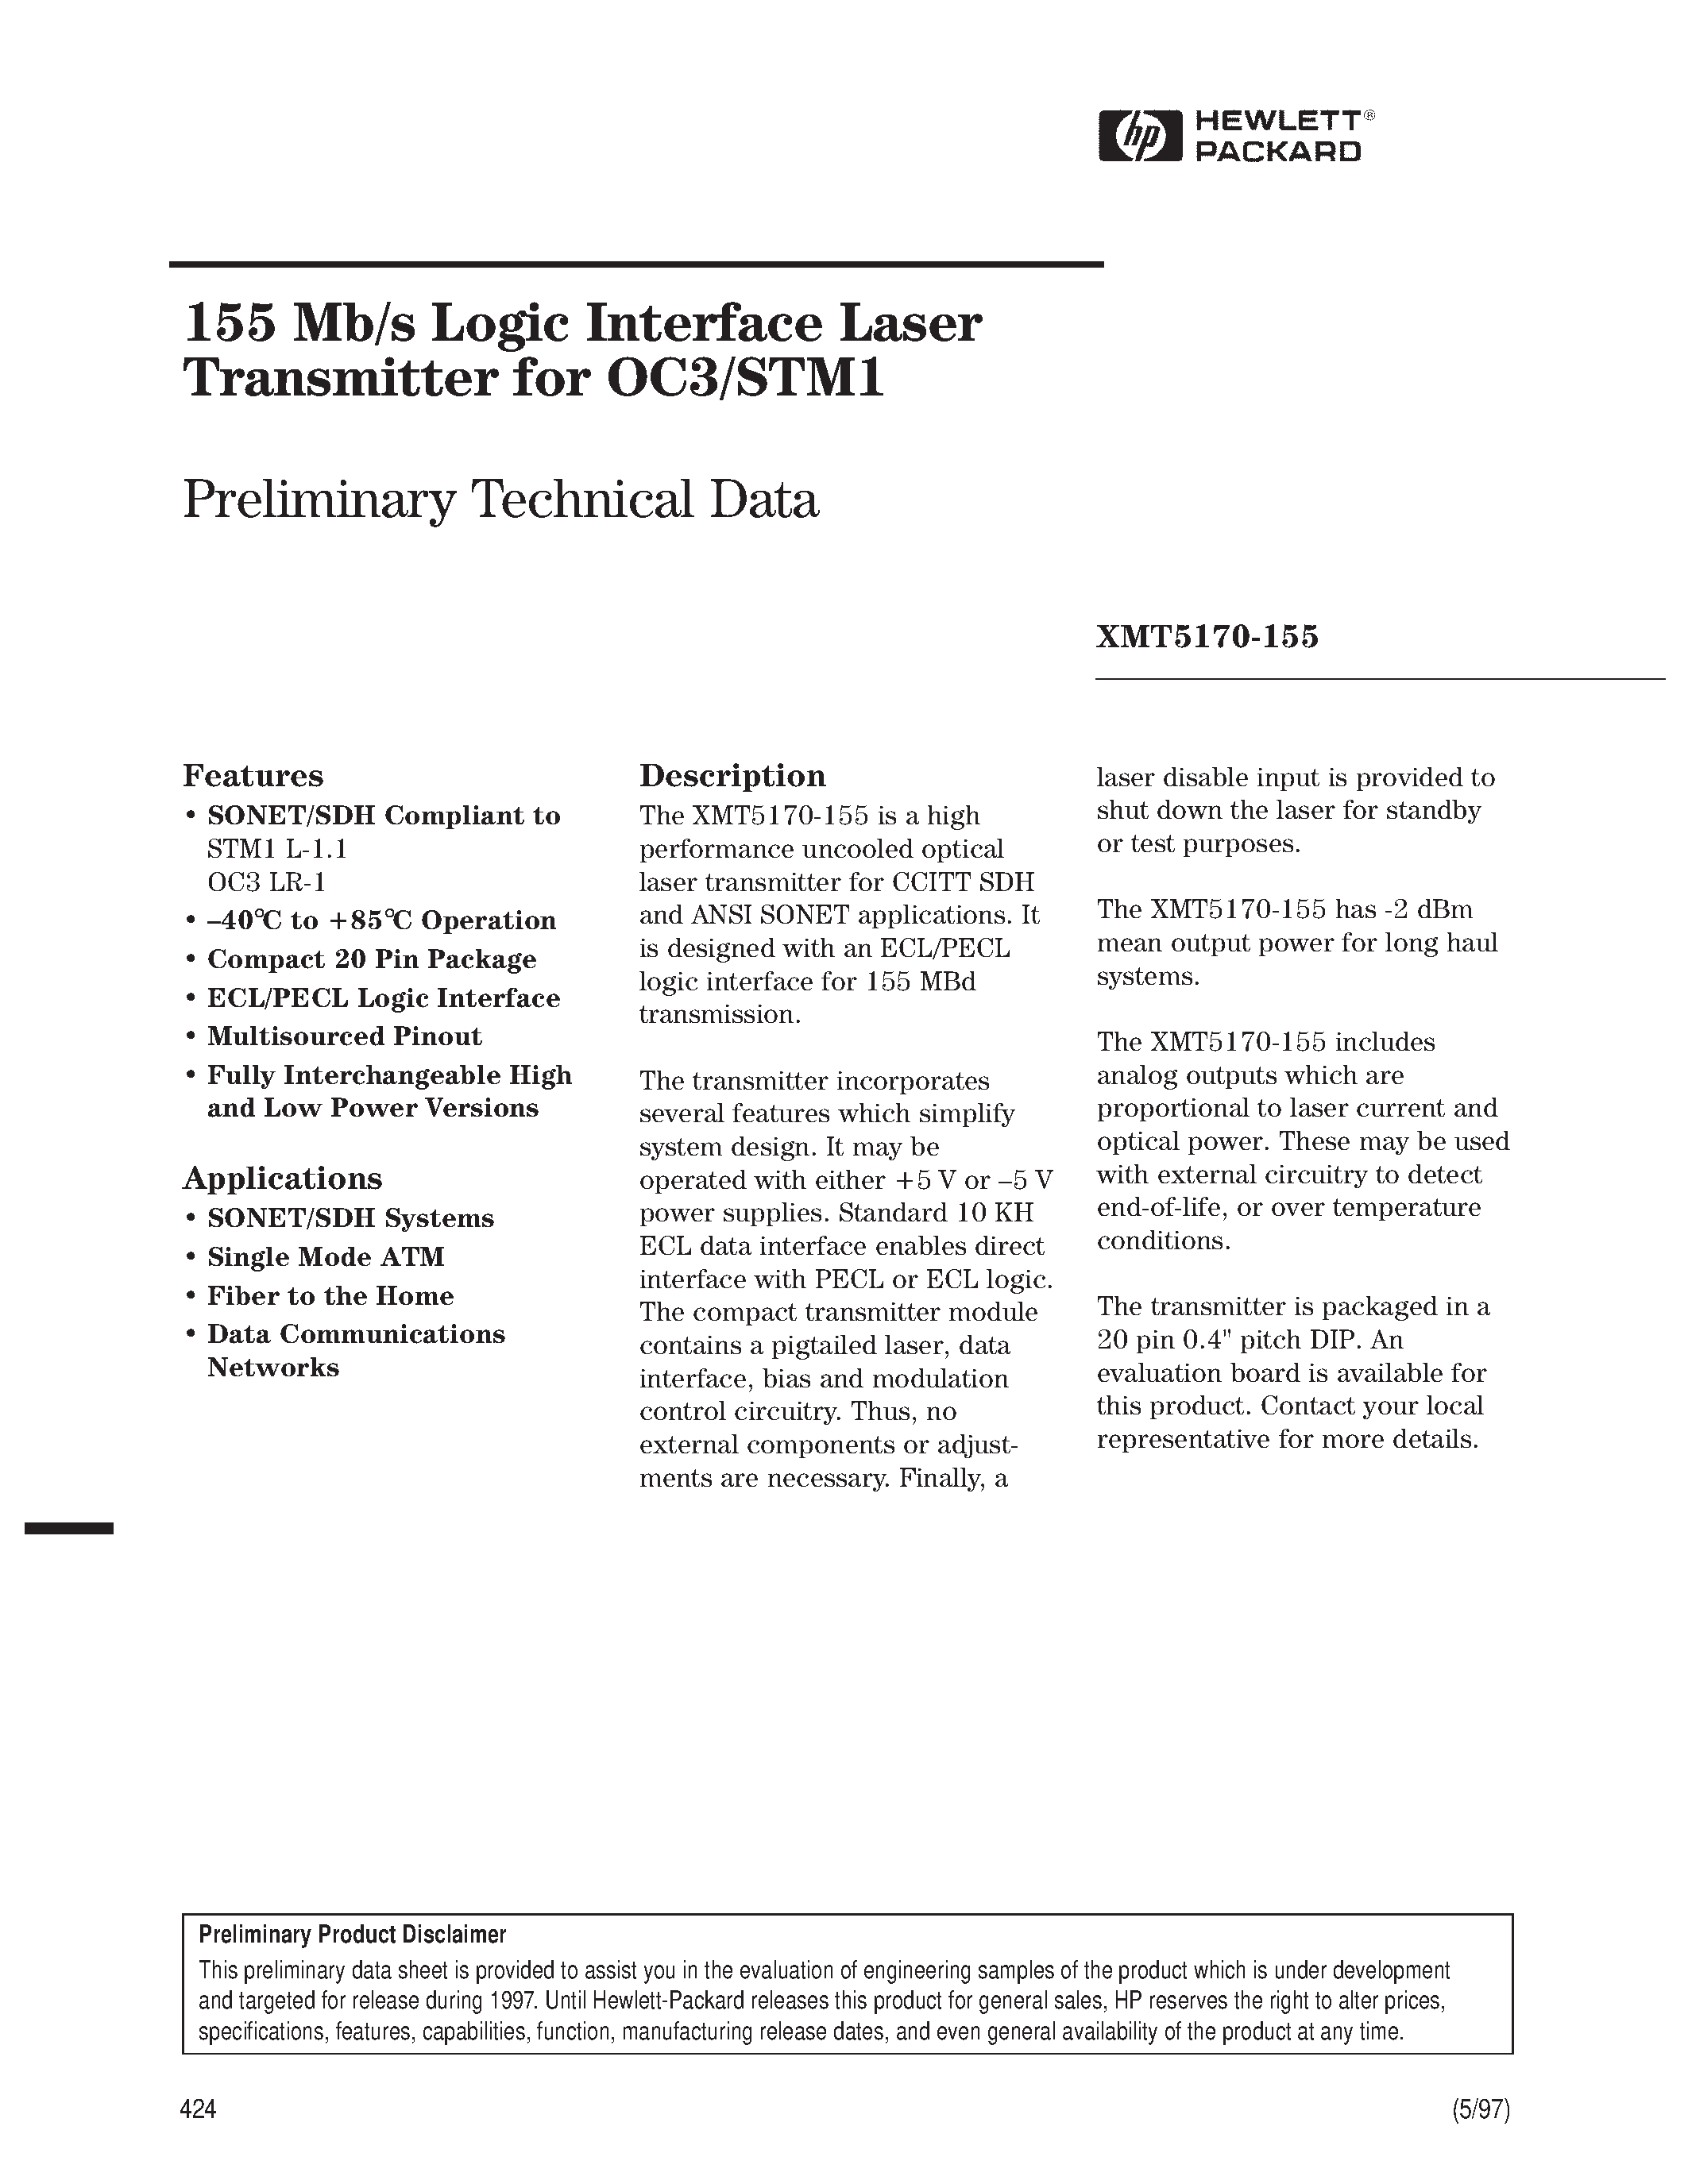 Datasheet XMT5170-155 - 155 Mb/s Logic Interface Laser Transmitter for OC3/STM1 page 1